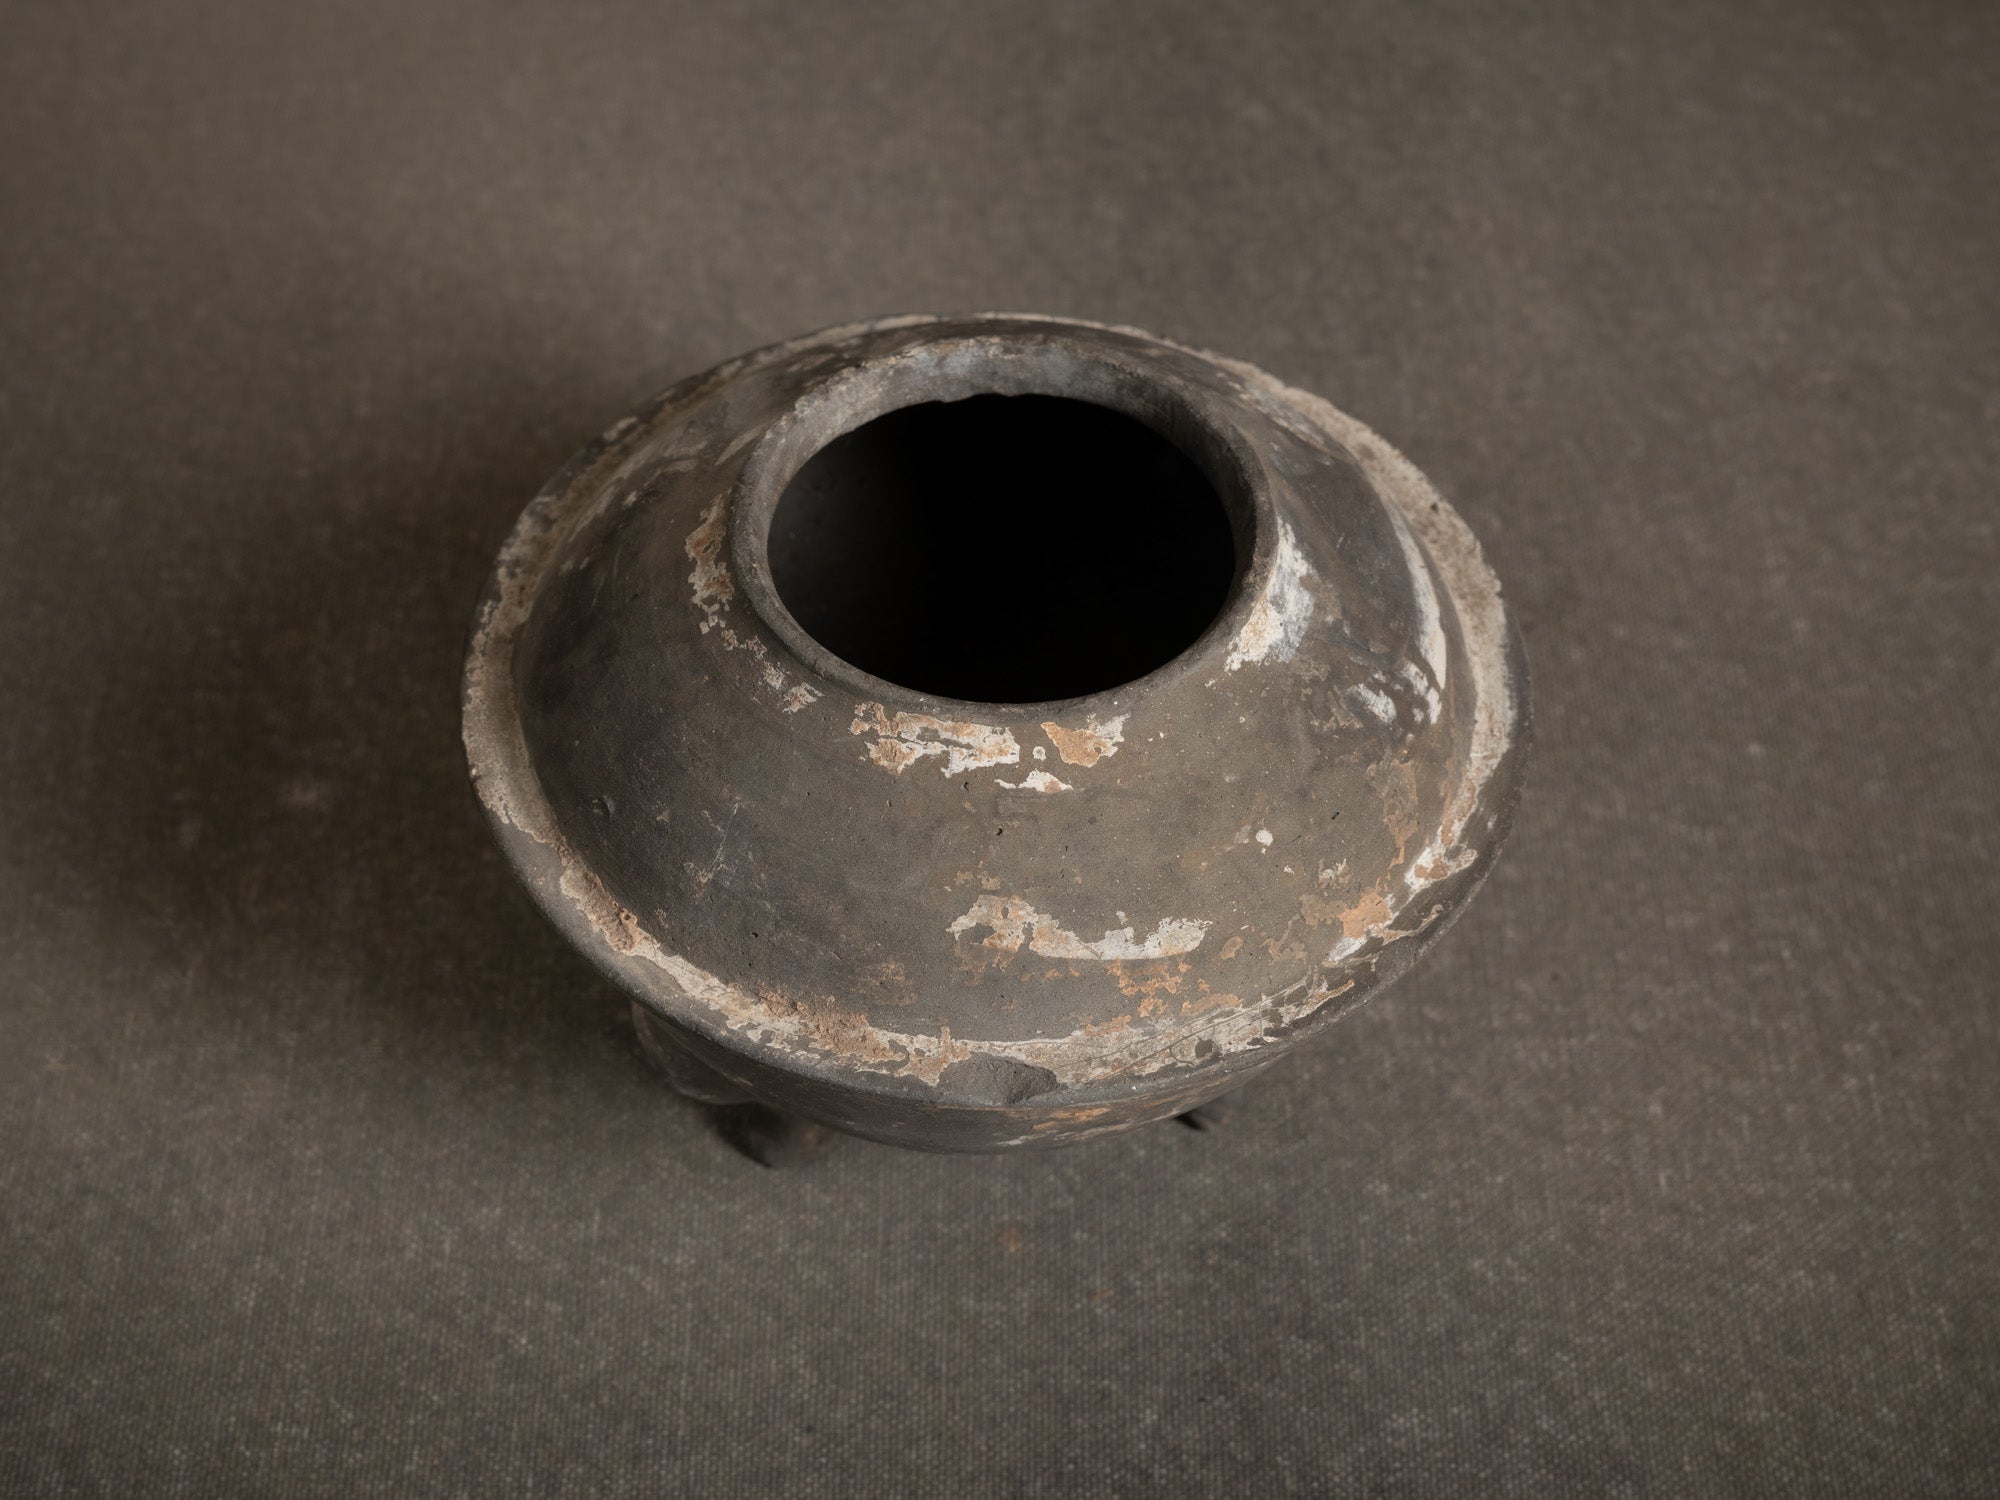 Vase / brûle-parfum Ding 鼎 en terre cuite, Chine (Dynastie Han, -206 av-JC. à 220 ap-JC.)..Terracotta Ding 鼎 vase / incense burner, China (Han Dynasty, -206 BC to 220 AD)